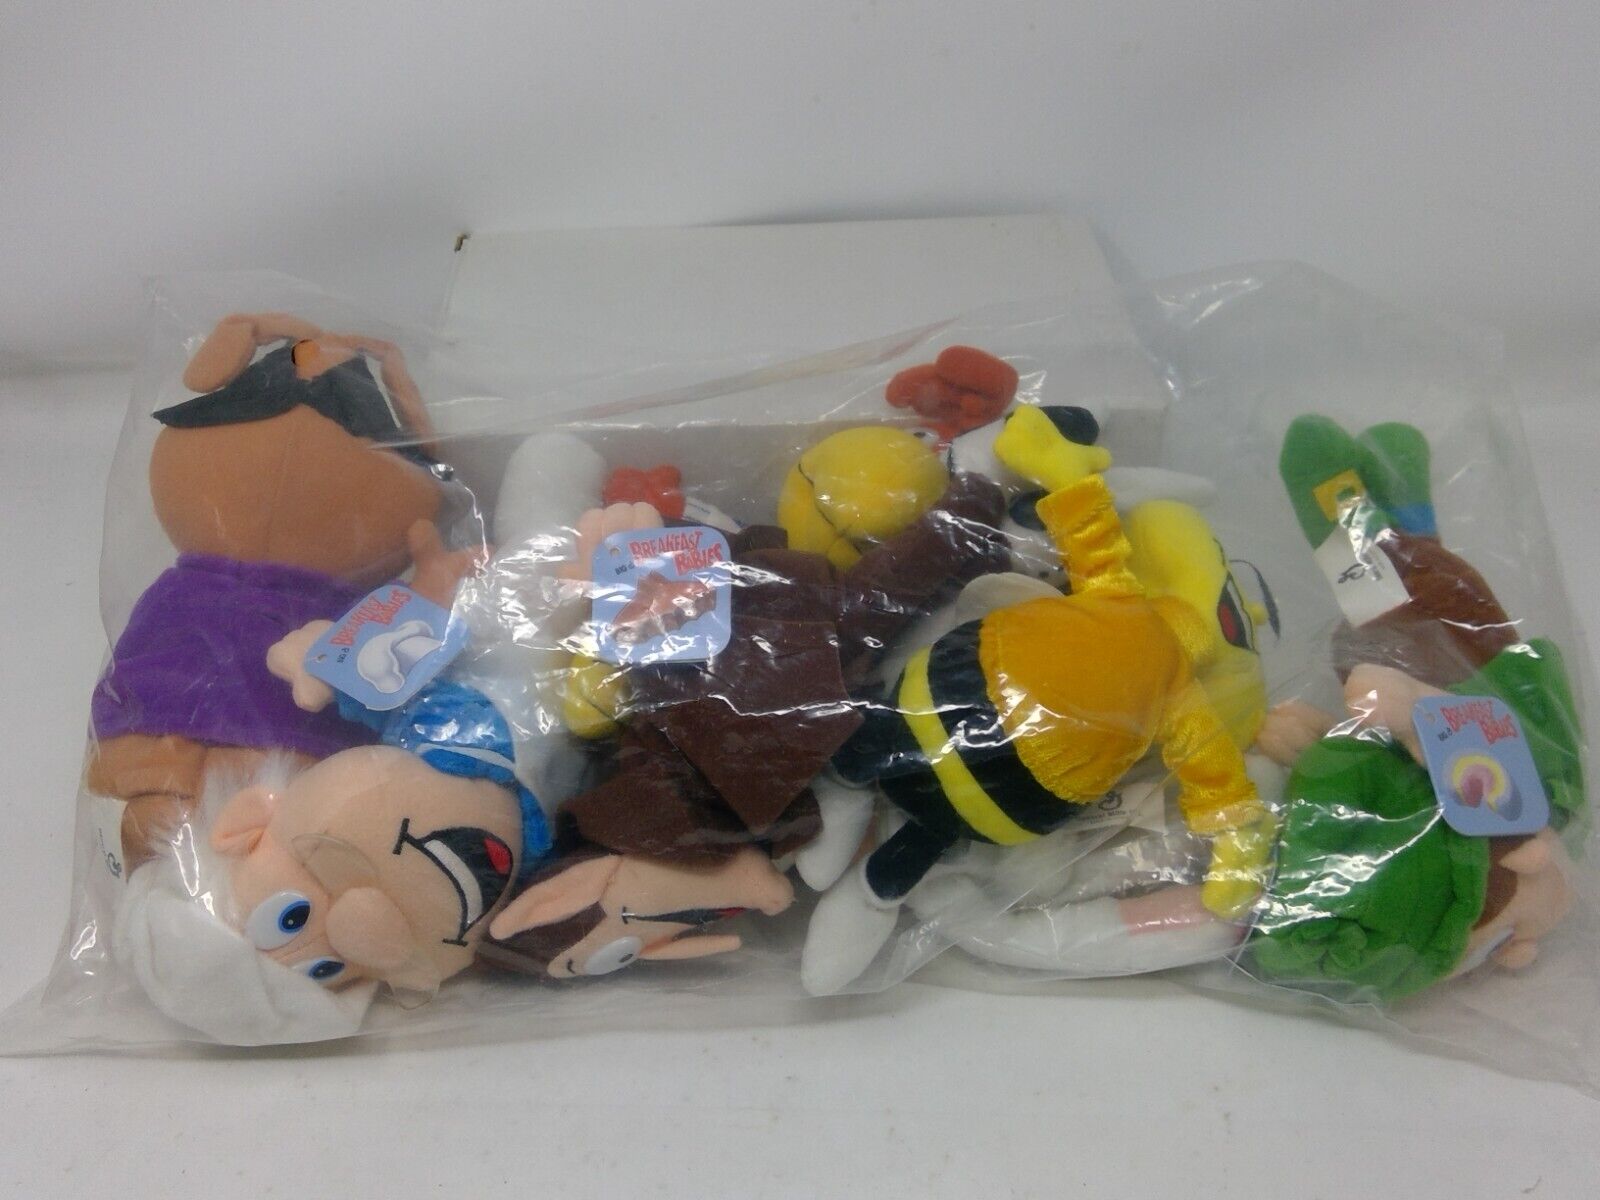 1997 General Mills Breakfast Babies Plush Cereal Mascots - Complete Set of 7 NIP